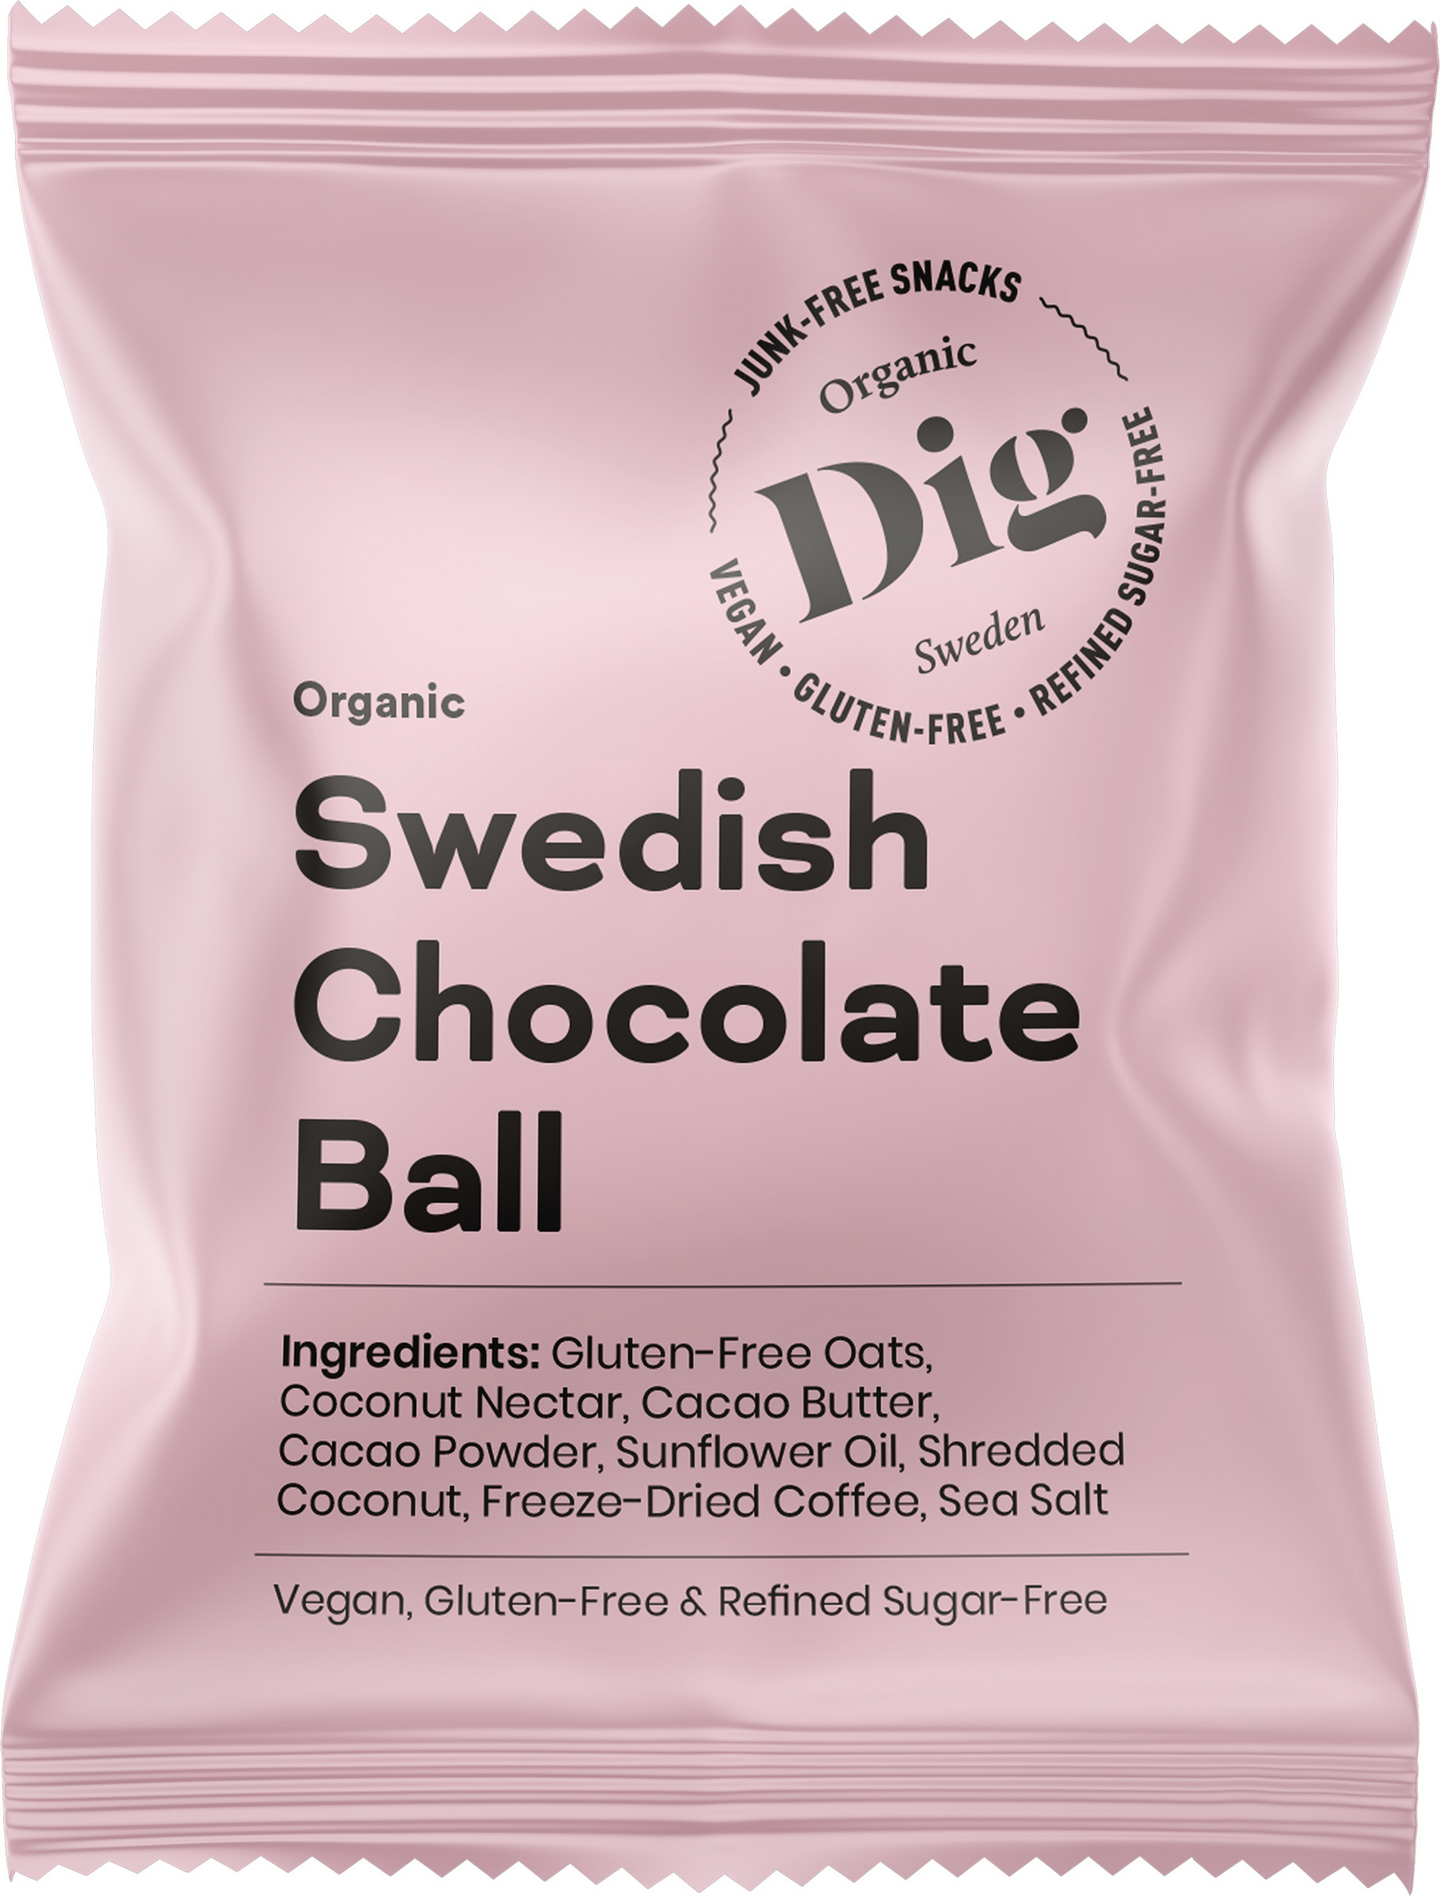 Dig chocolate ball 25g organic